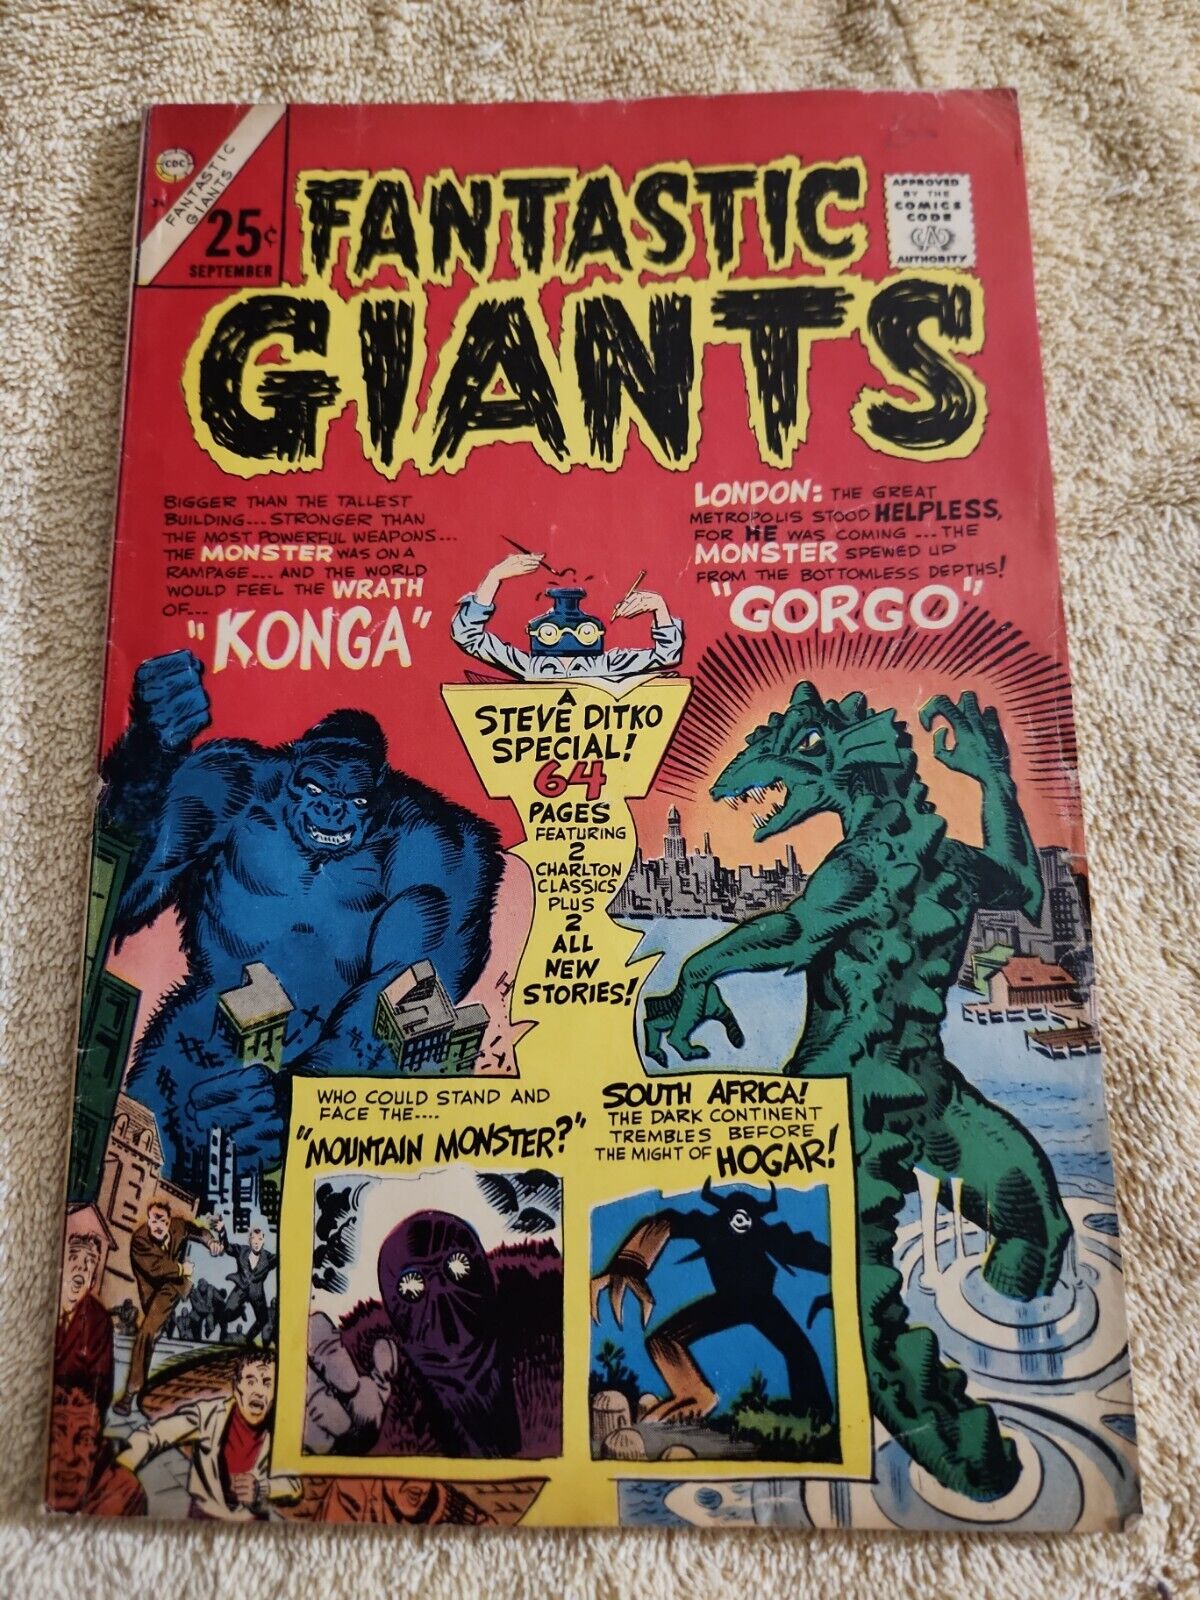 Fantastic Giants, Vol 2 #24 Steve Ditko art Charlton Comics 64 pages 1966 